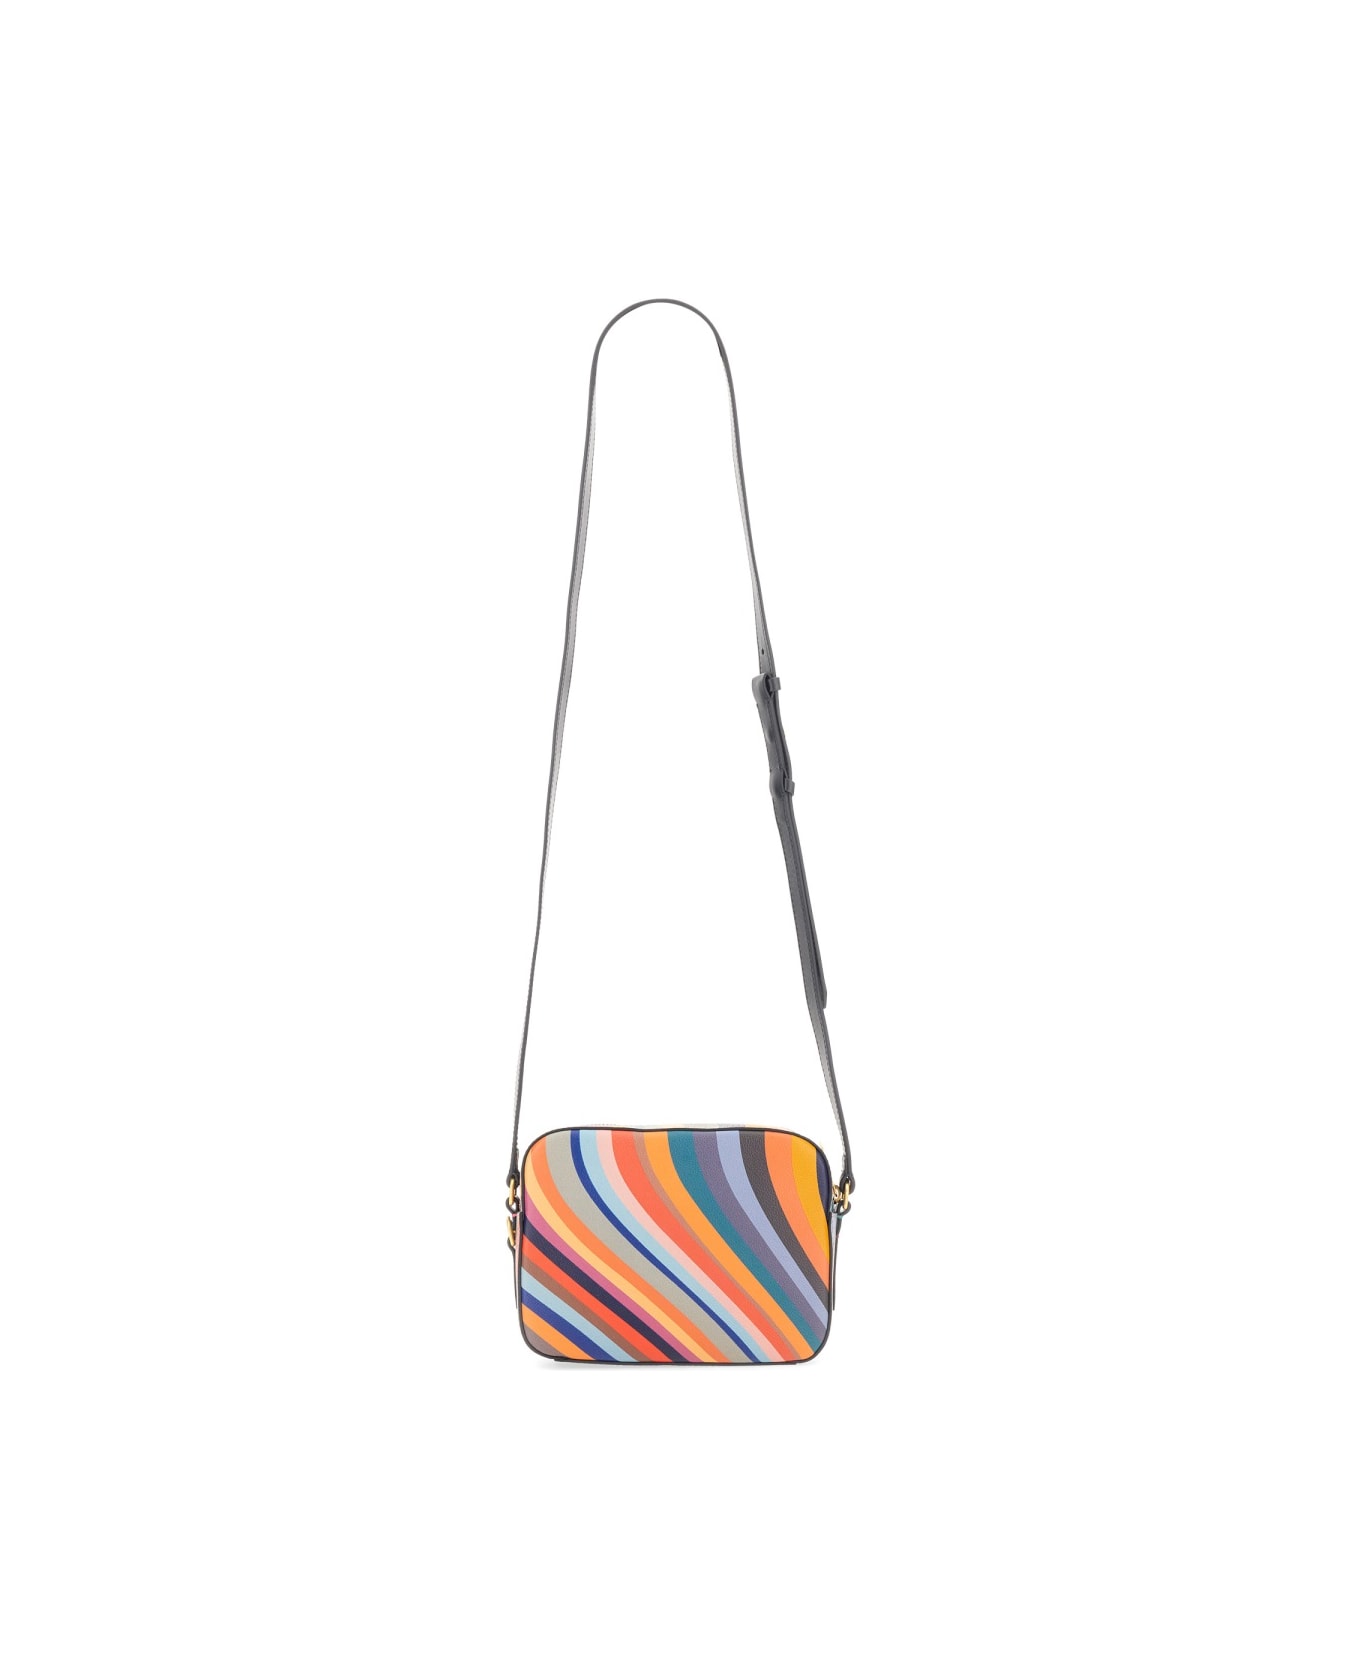 Paul Smith Shoulder Bag 'swirl' - Multicolor ショルダーバッグ